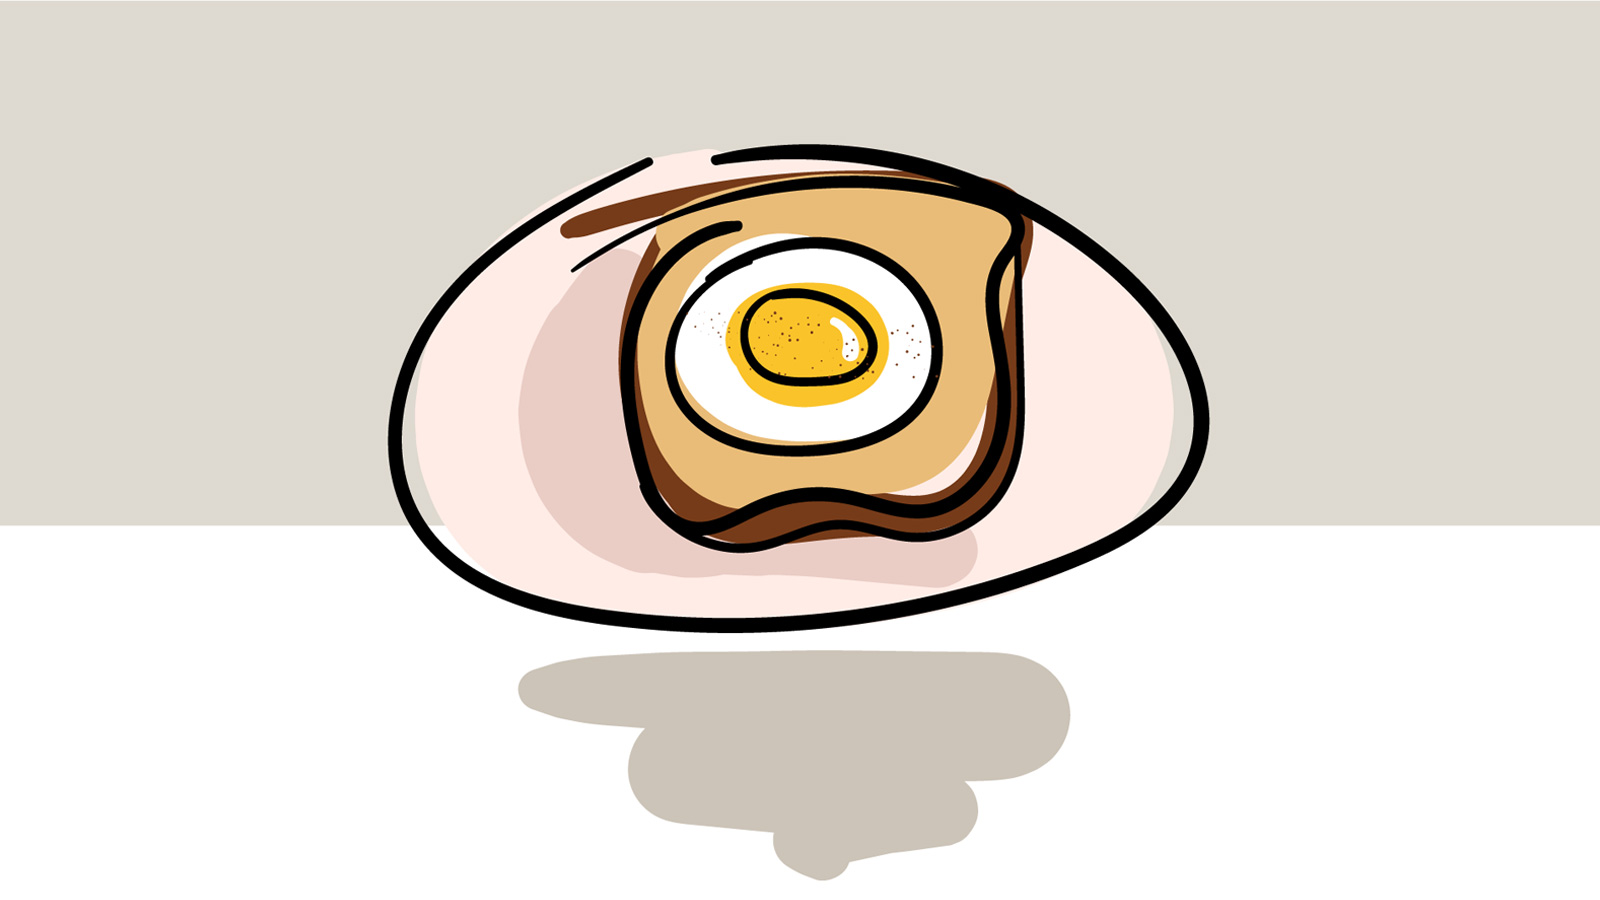 A cartoon depiction of an air fryer egg on wholemeal toast